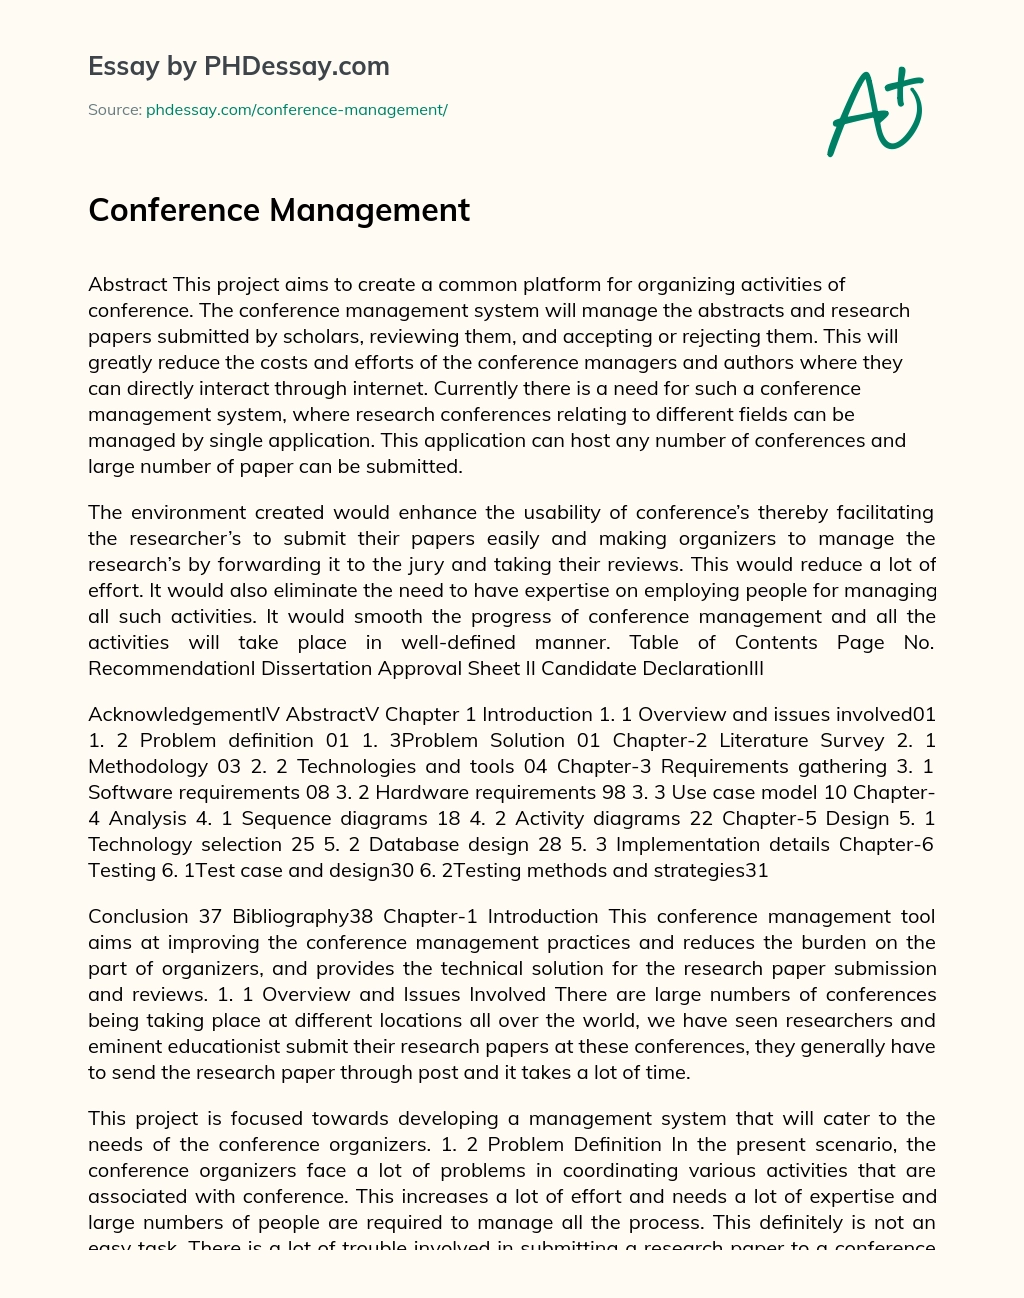 Conference Management essay